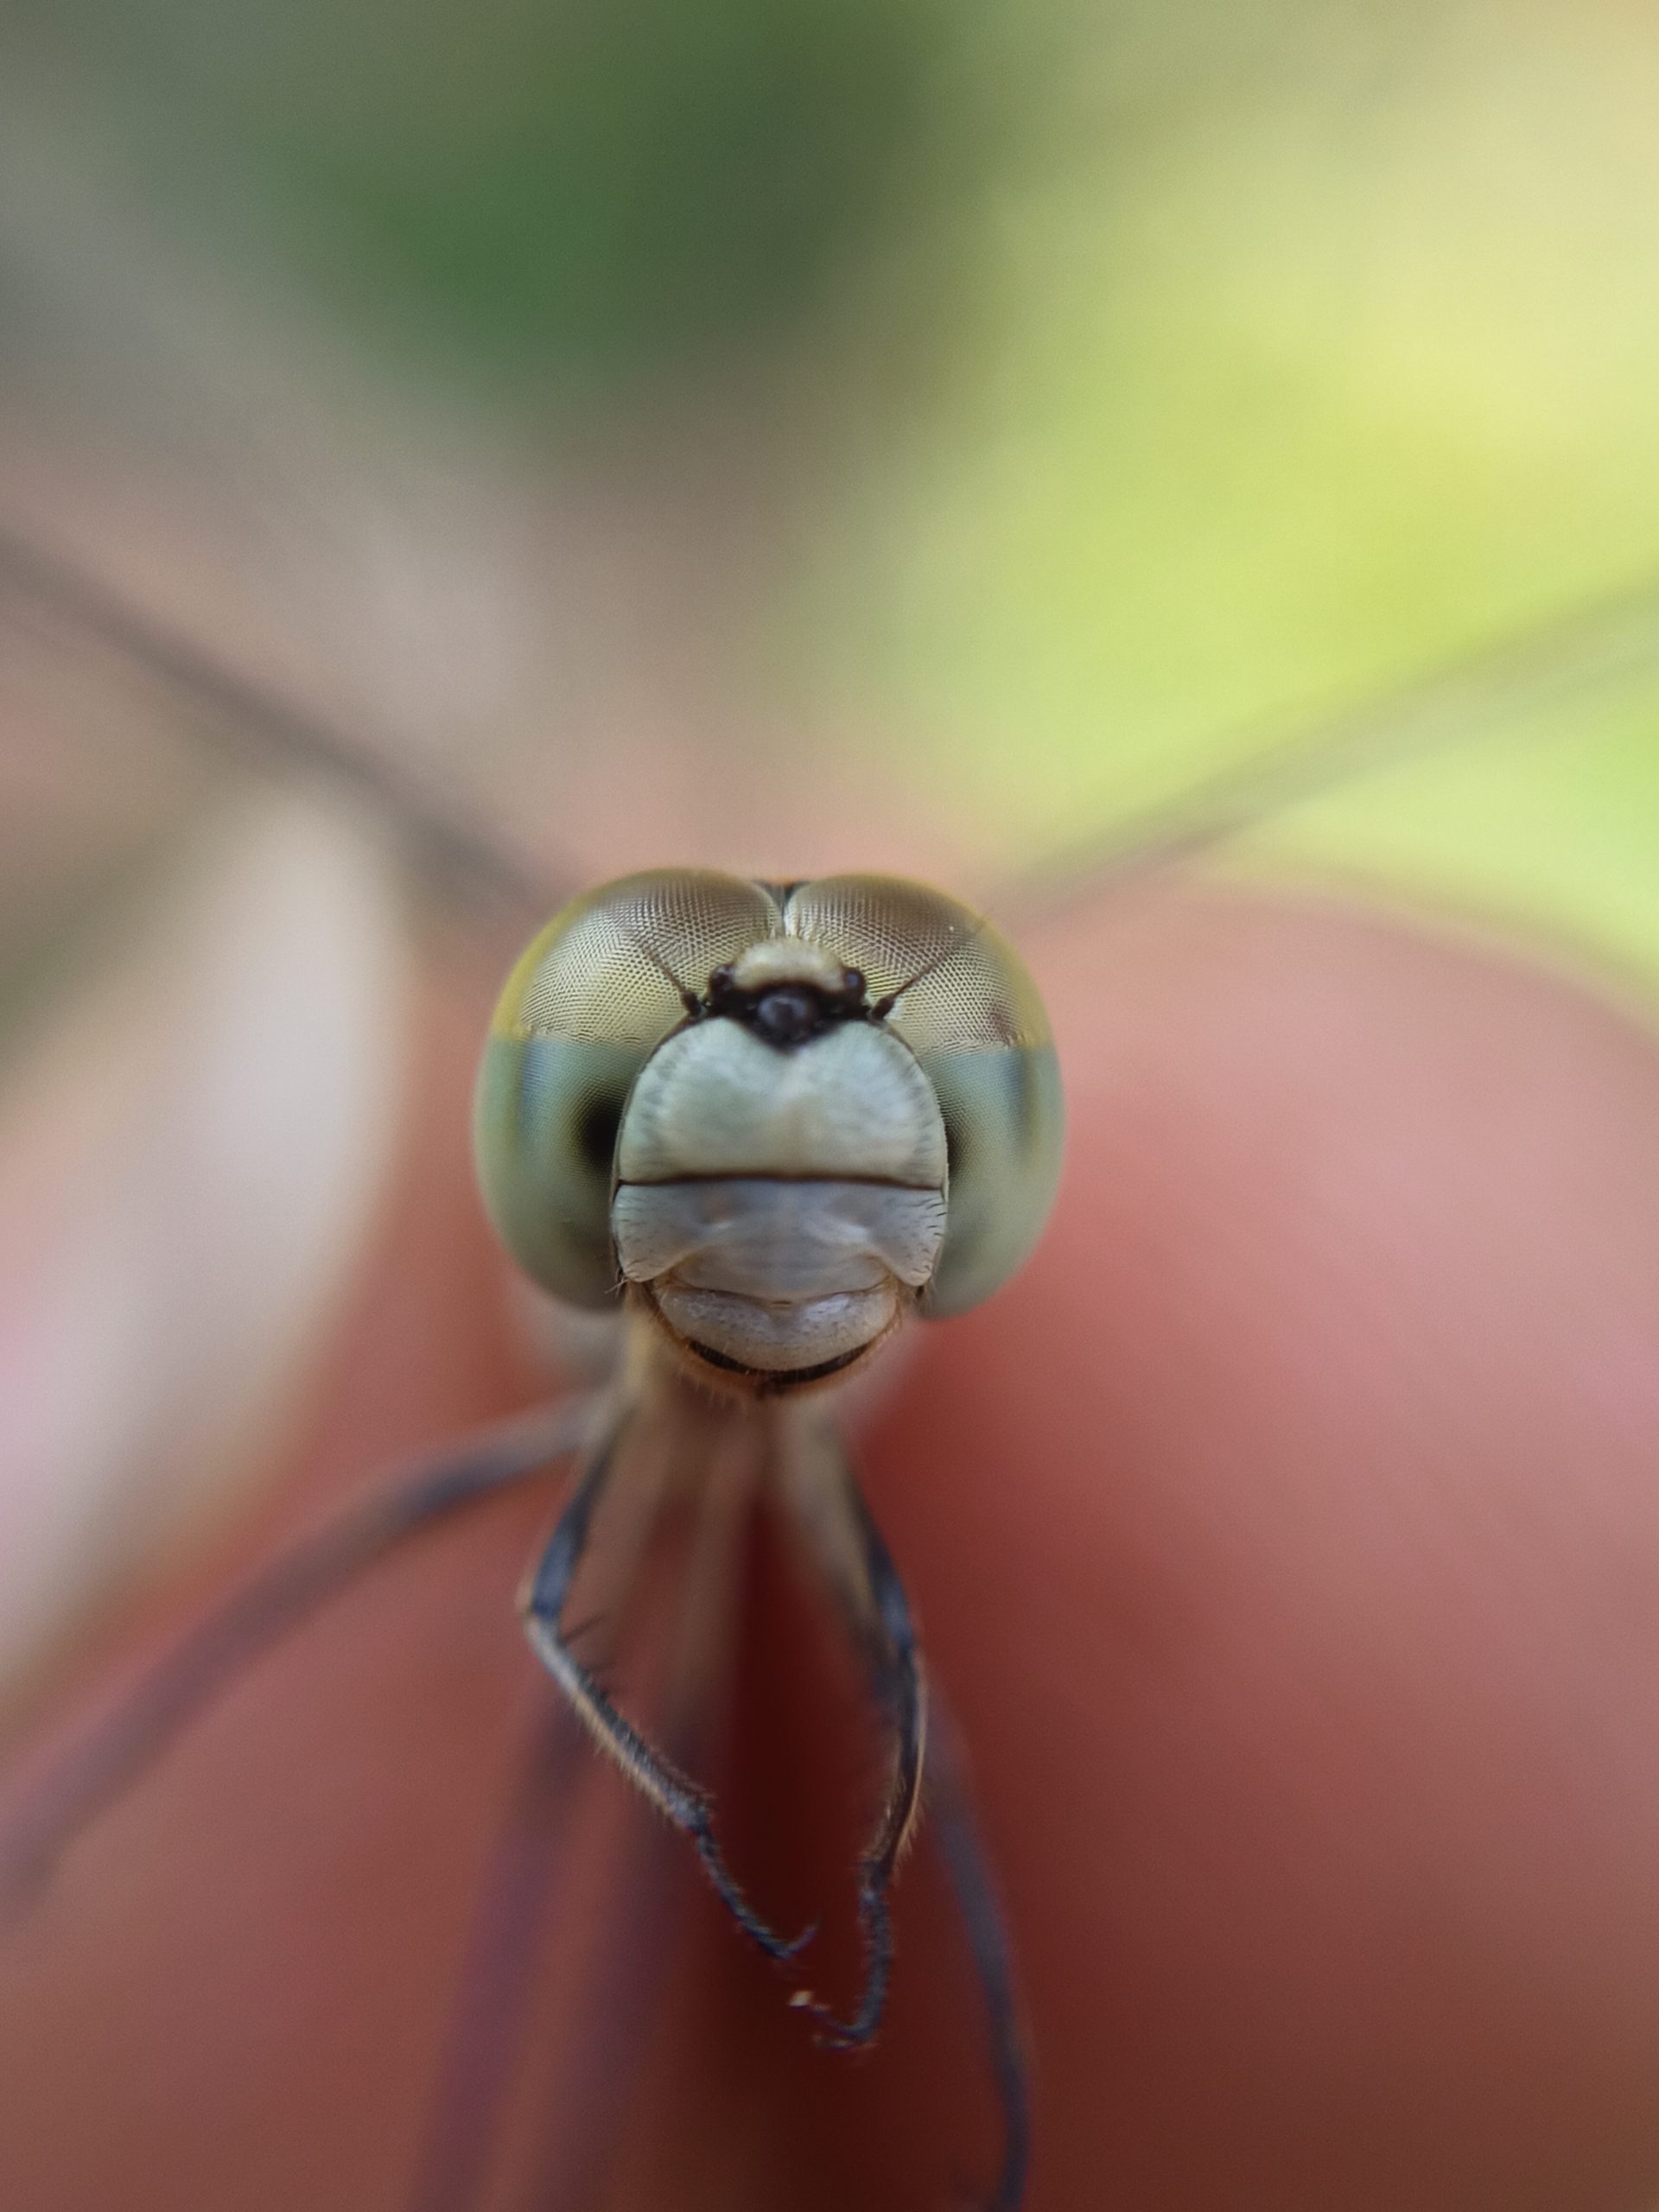 Closeup of a housefly